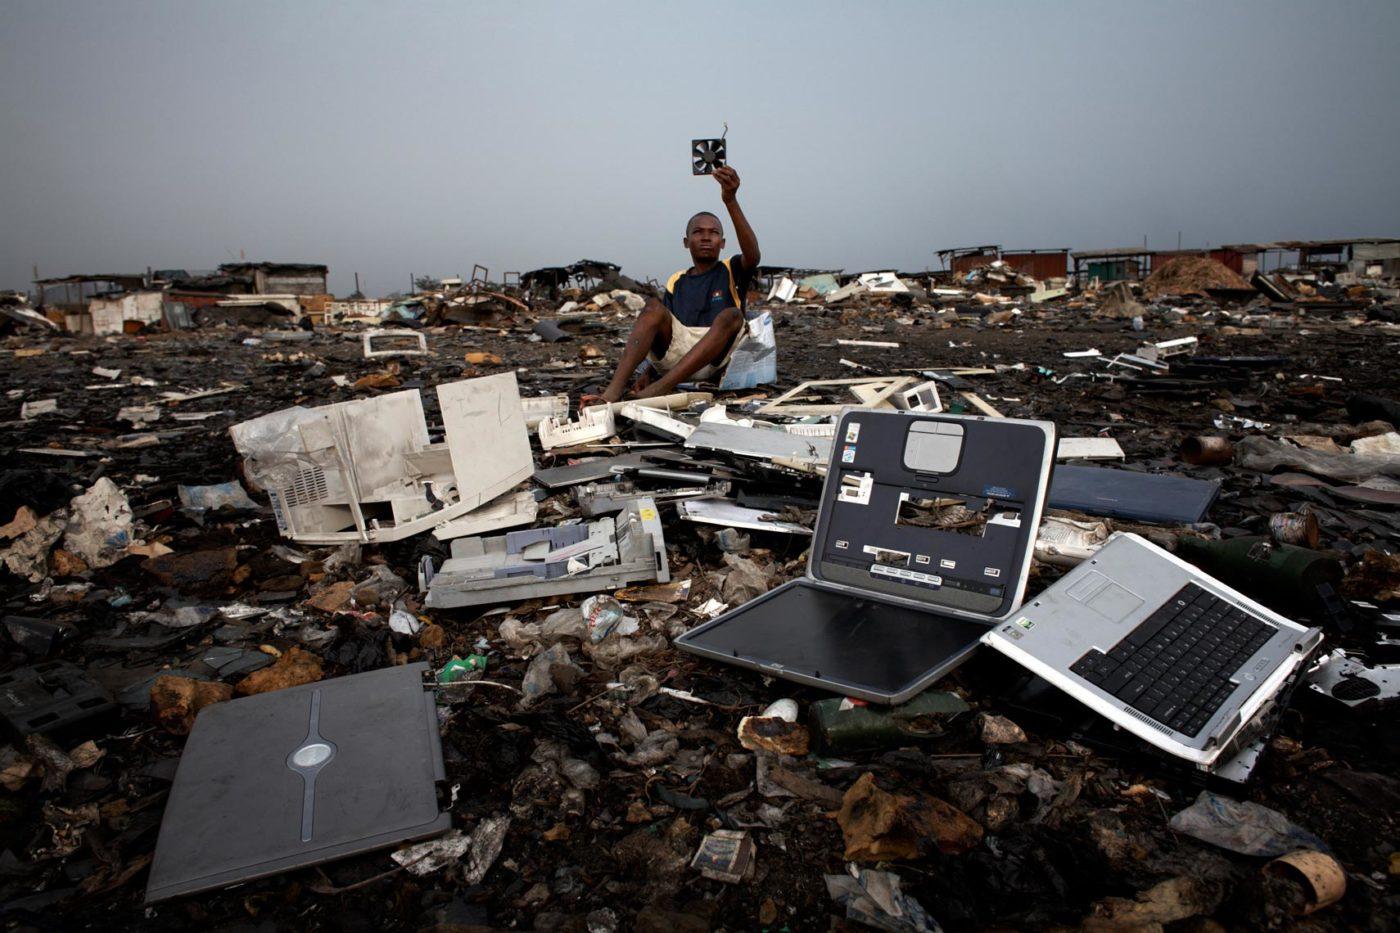 Агбогблоши, гана — свалка электронных отходов.